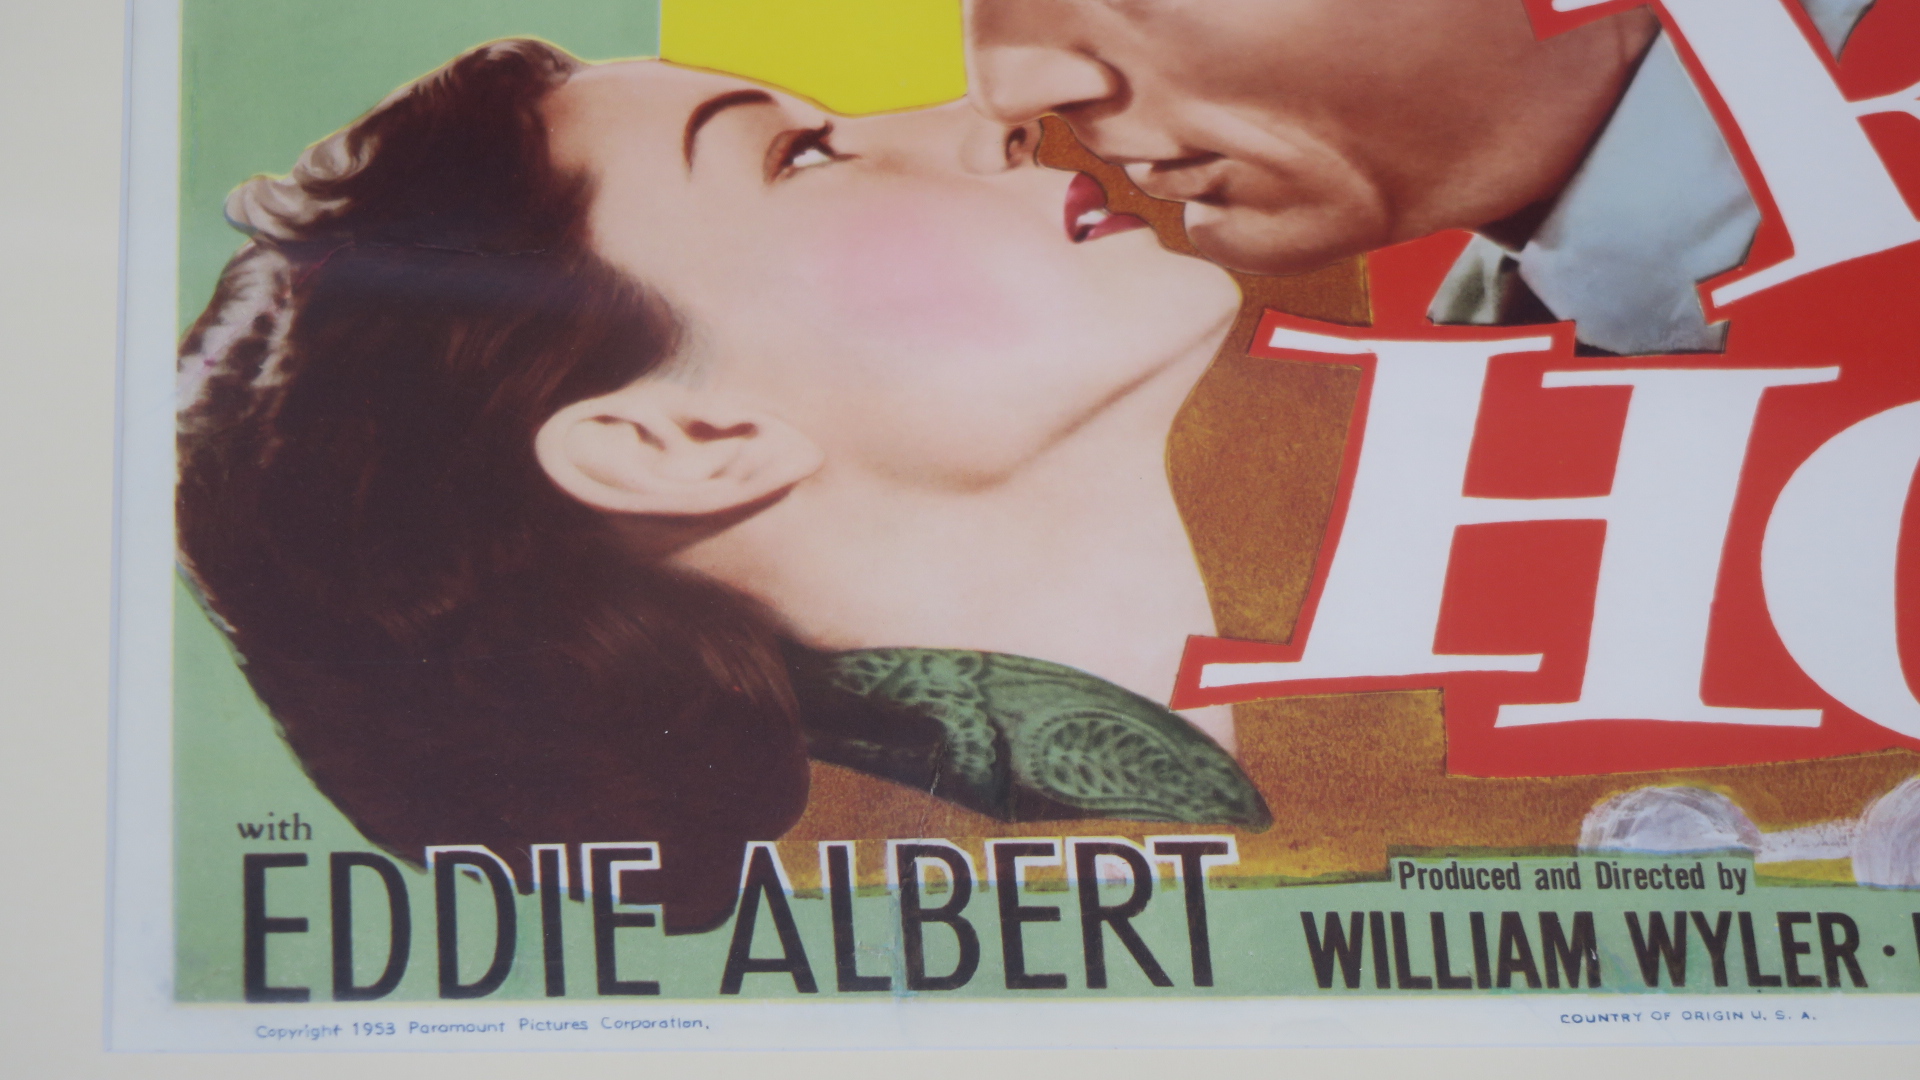 Roman Holiday (1953) Original US half sheet film poster starring Audrey Hepburn and Gregory Peck - Image 3 of 3